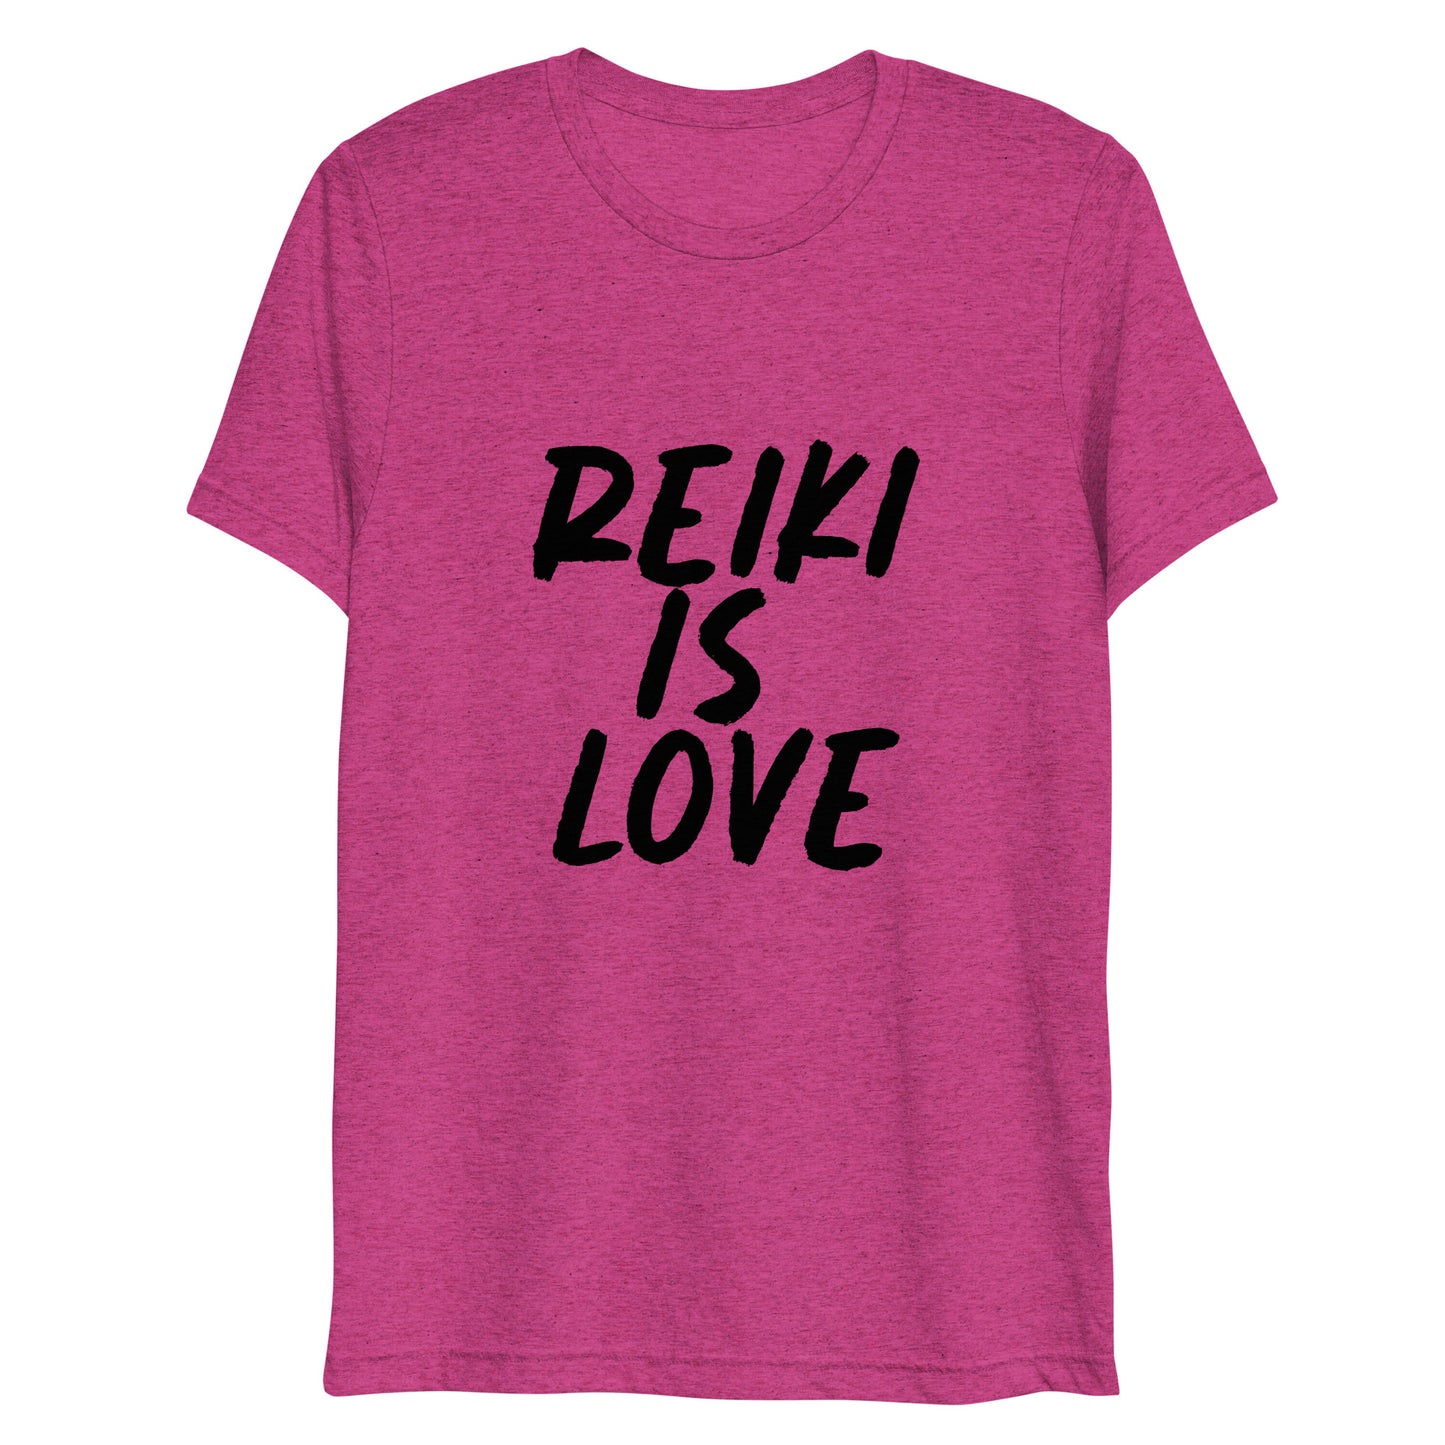 Reiki is Love T-shirt